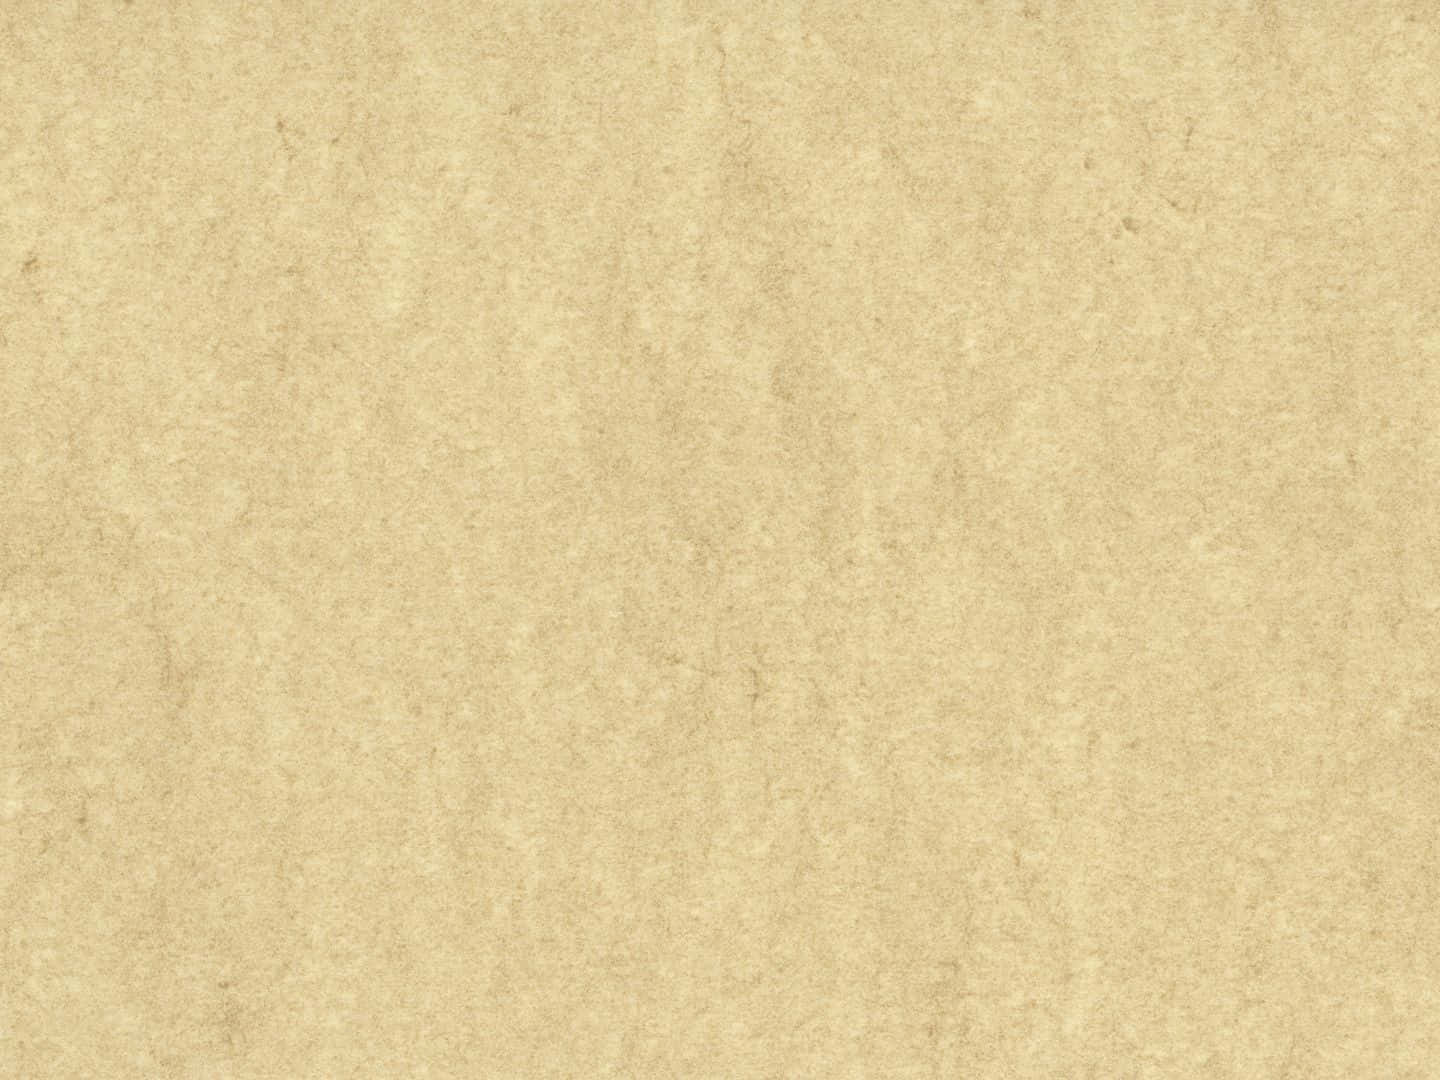 Baggrund af pergament i lysebrun farve